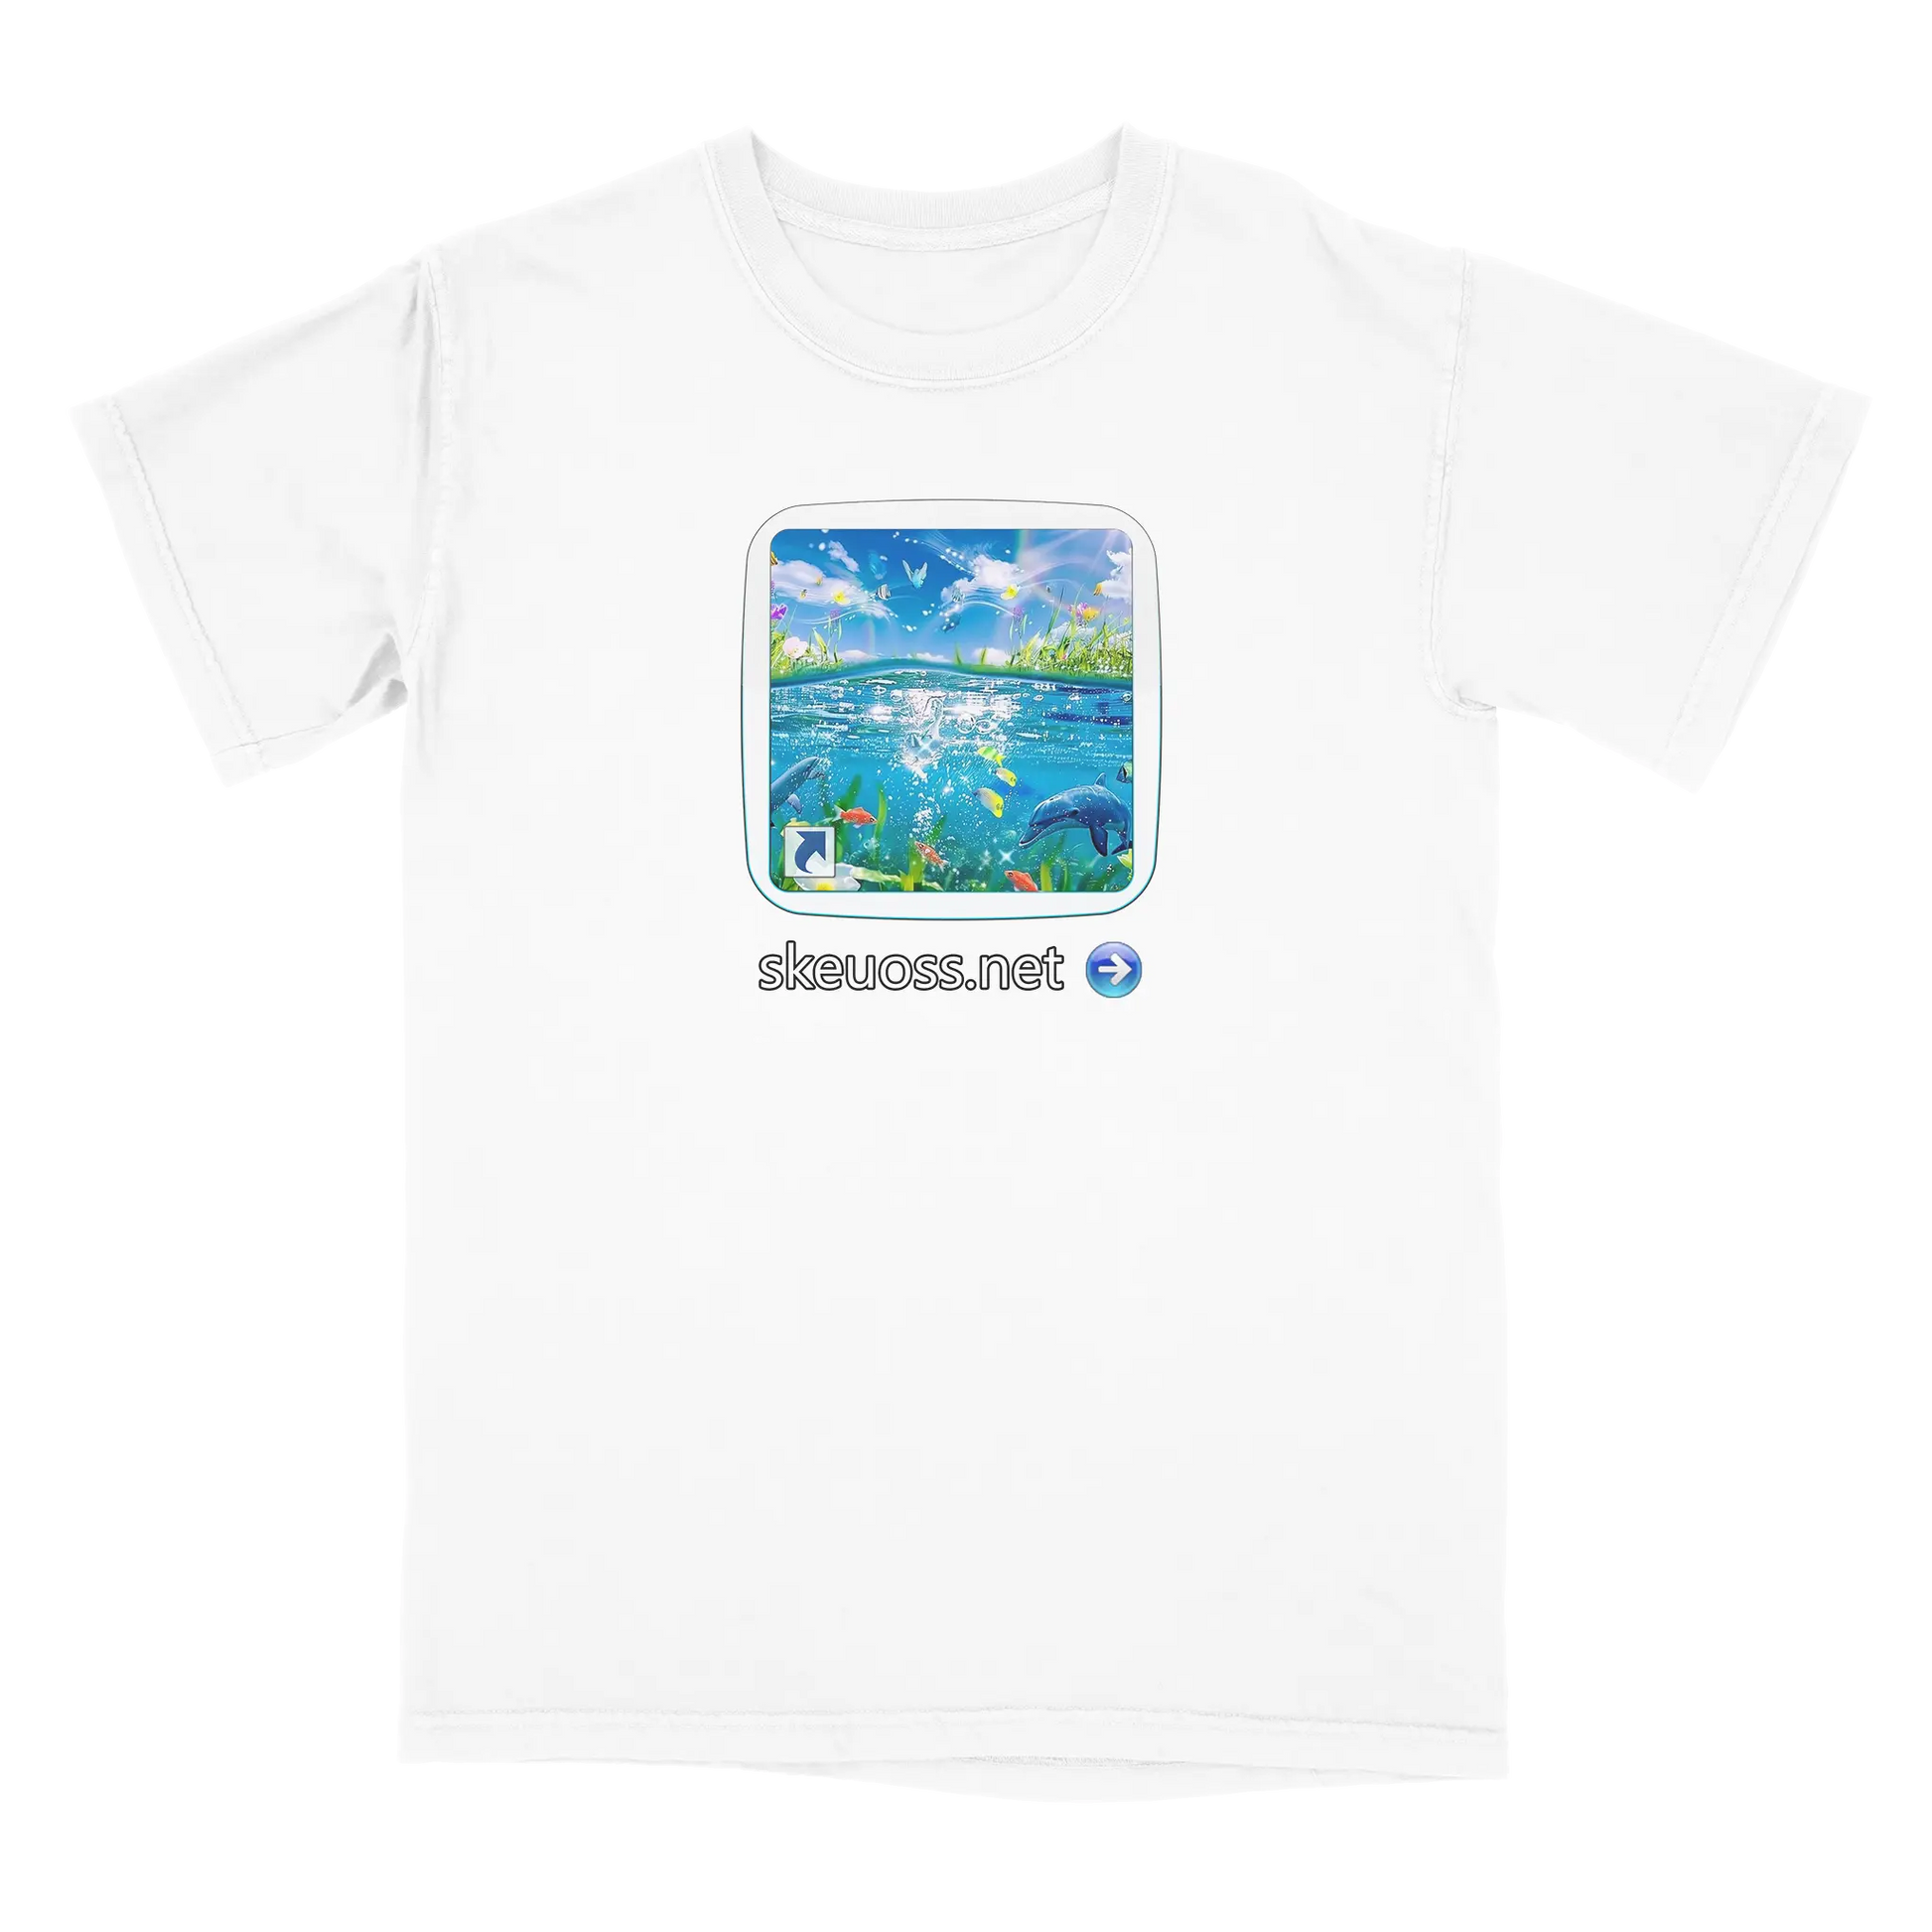 Frutiger Aero T-shirt - User Login Collection - User 200